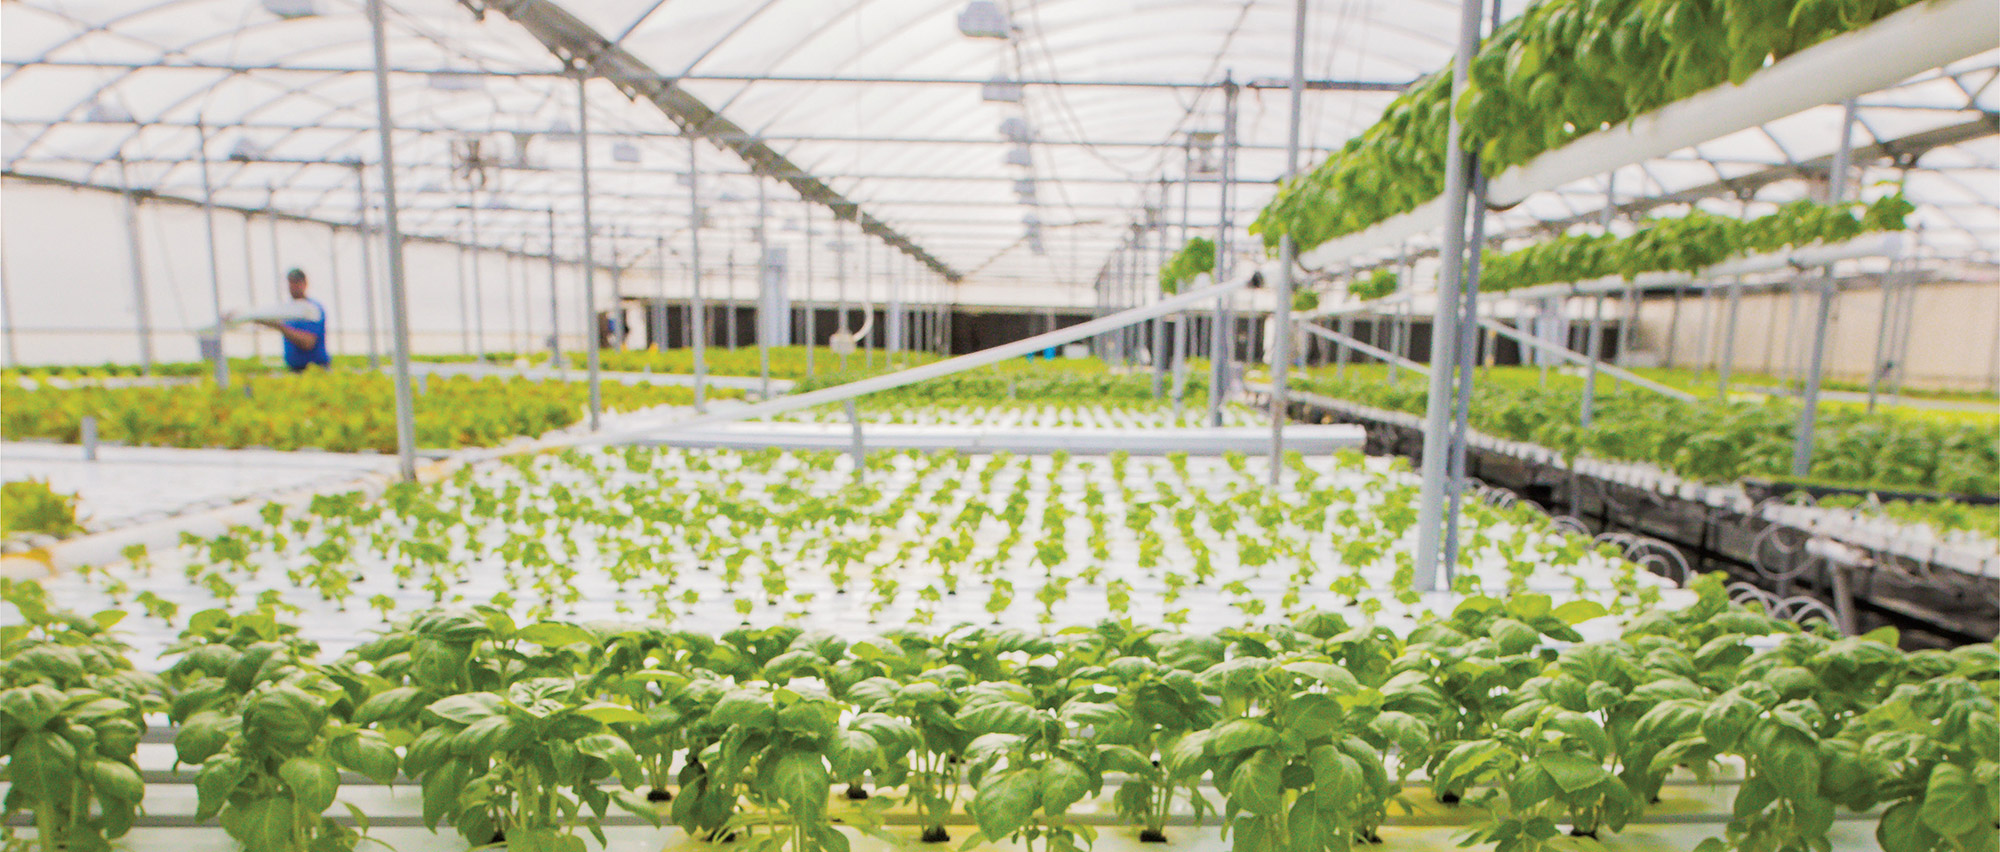 Lettuce in Greenhouse